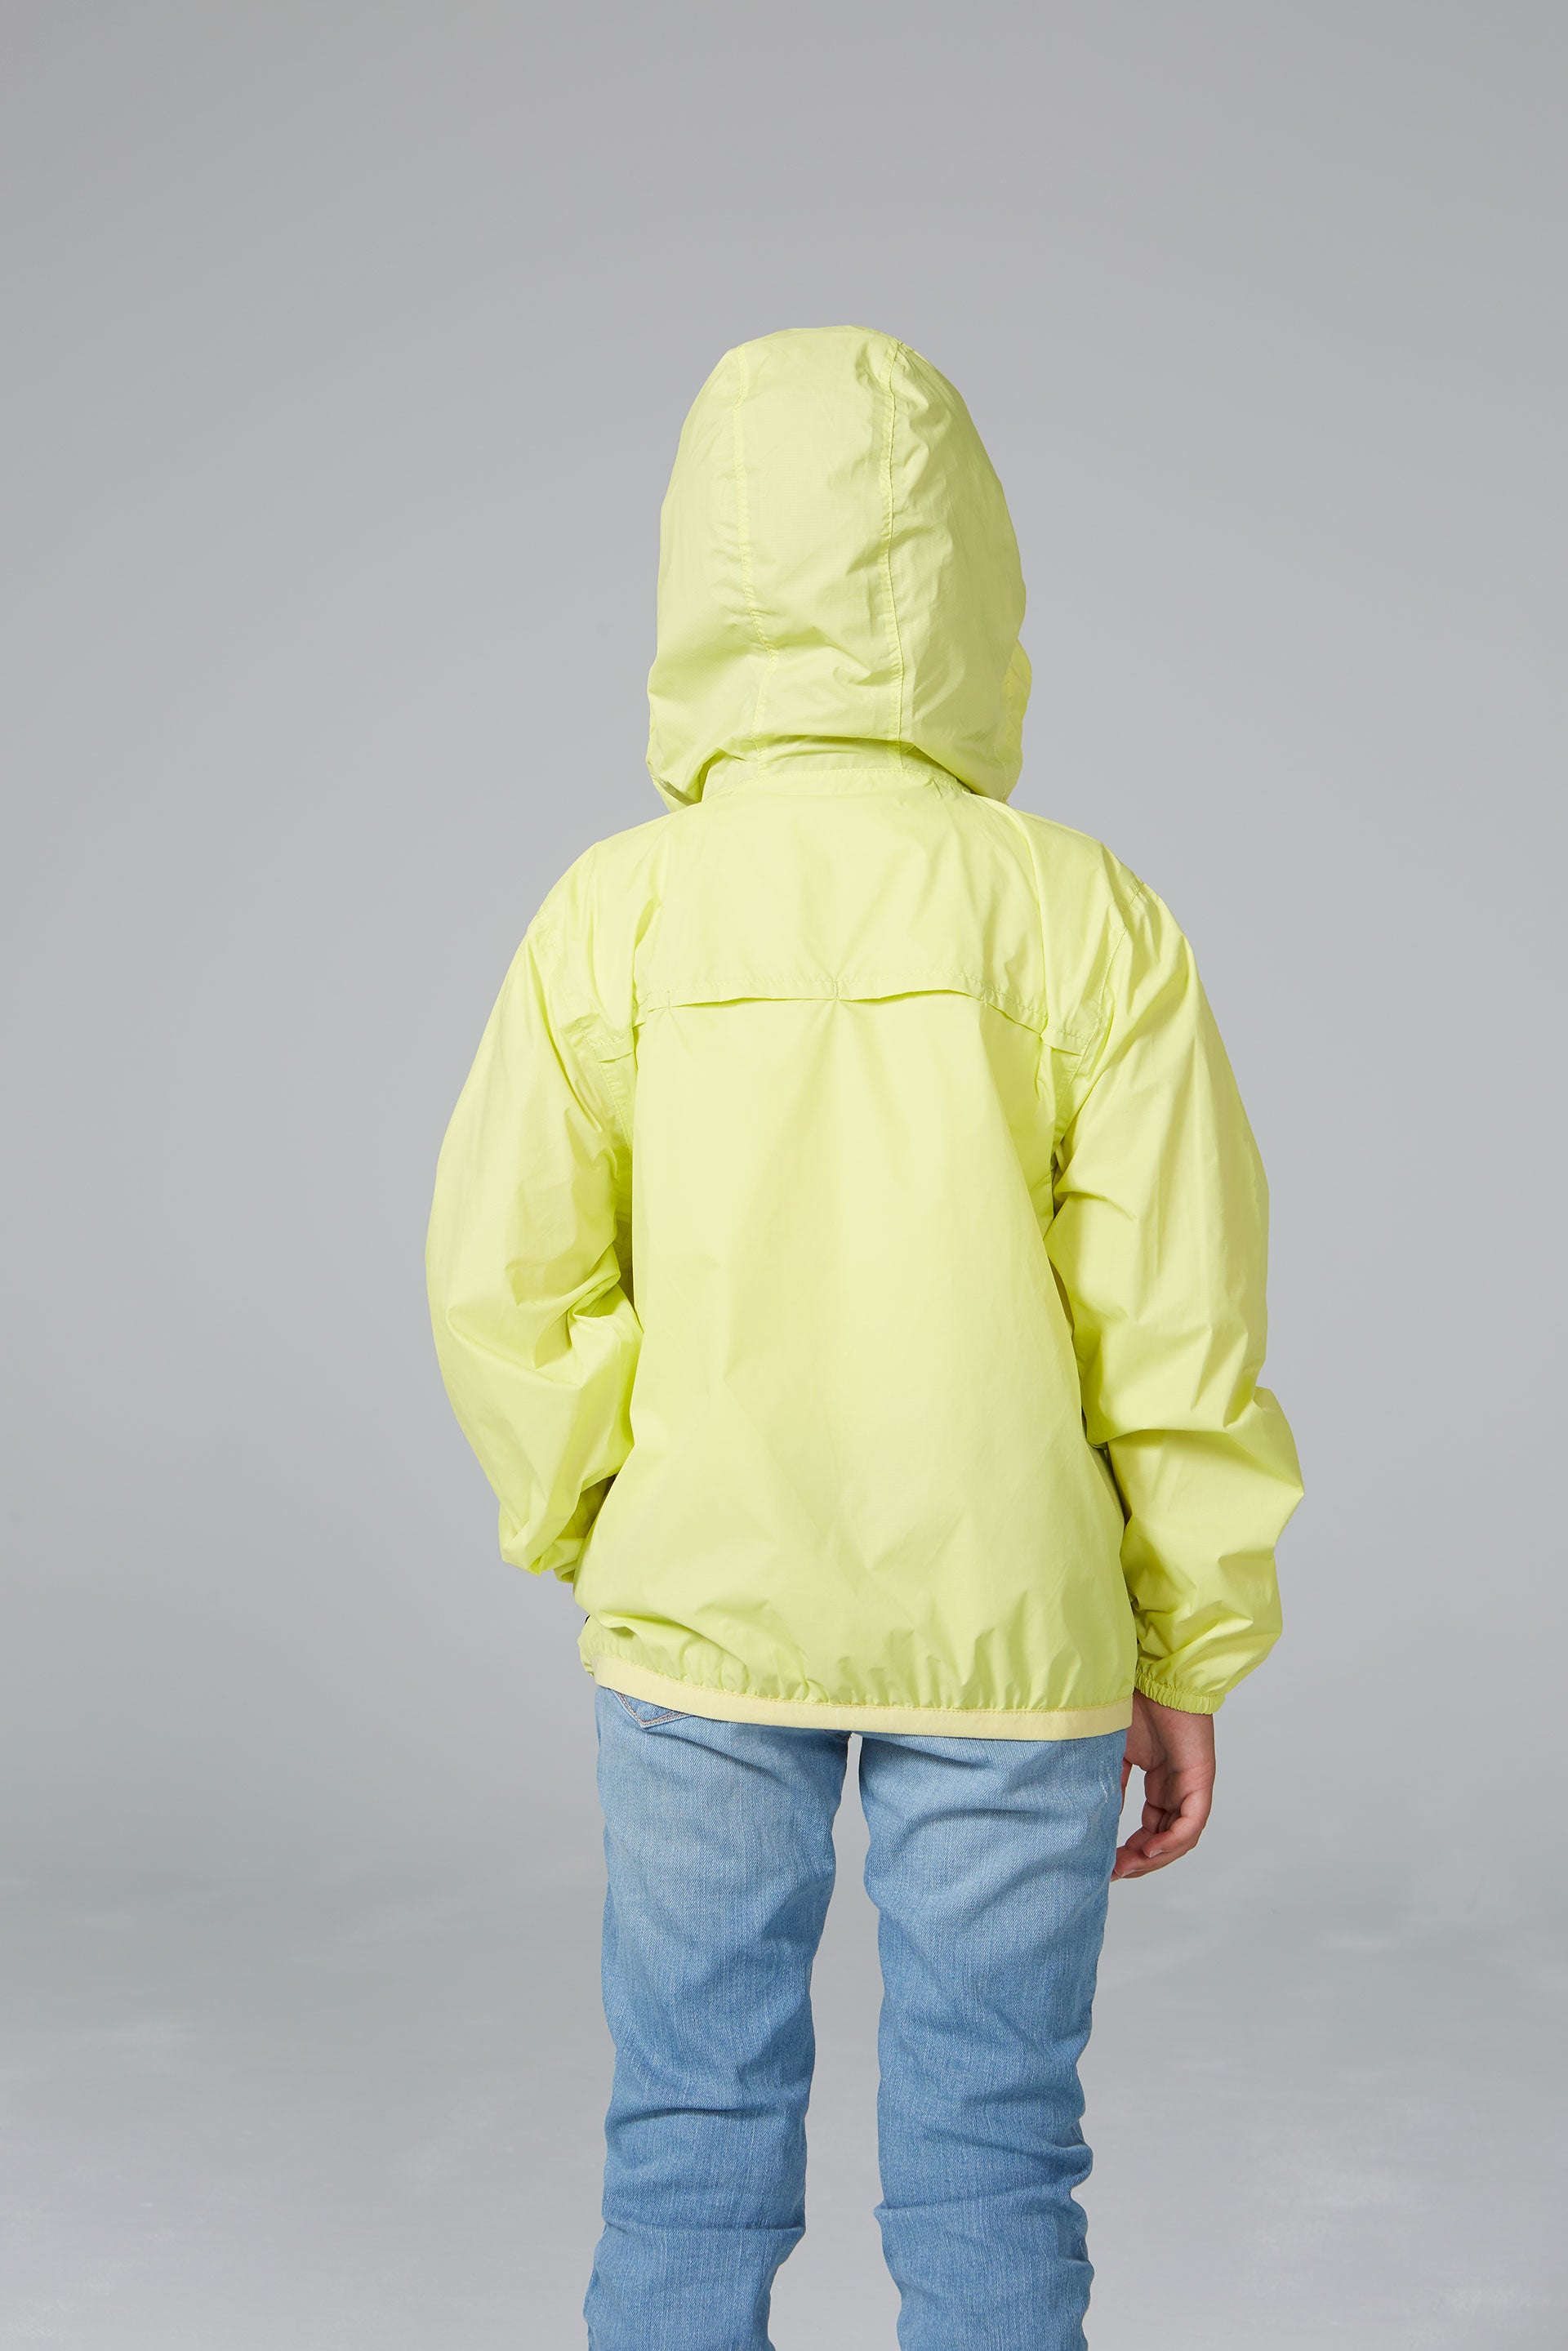 SAM - Kids Citrus Full Zip Packable Rain Jacket - O8lifestyle.